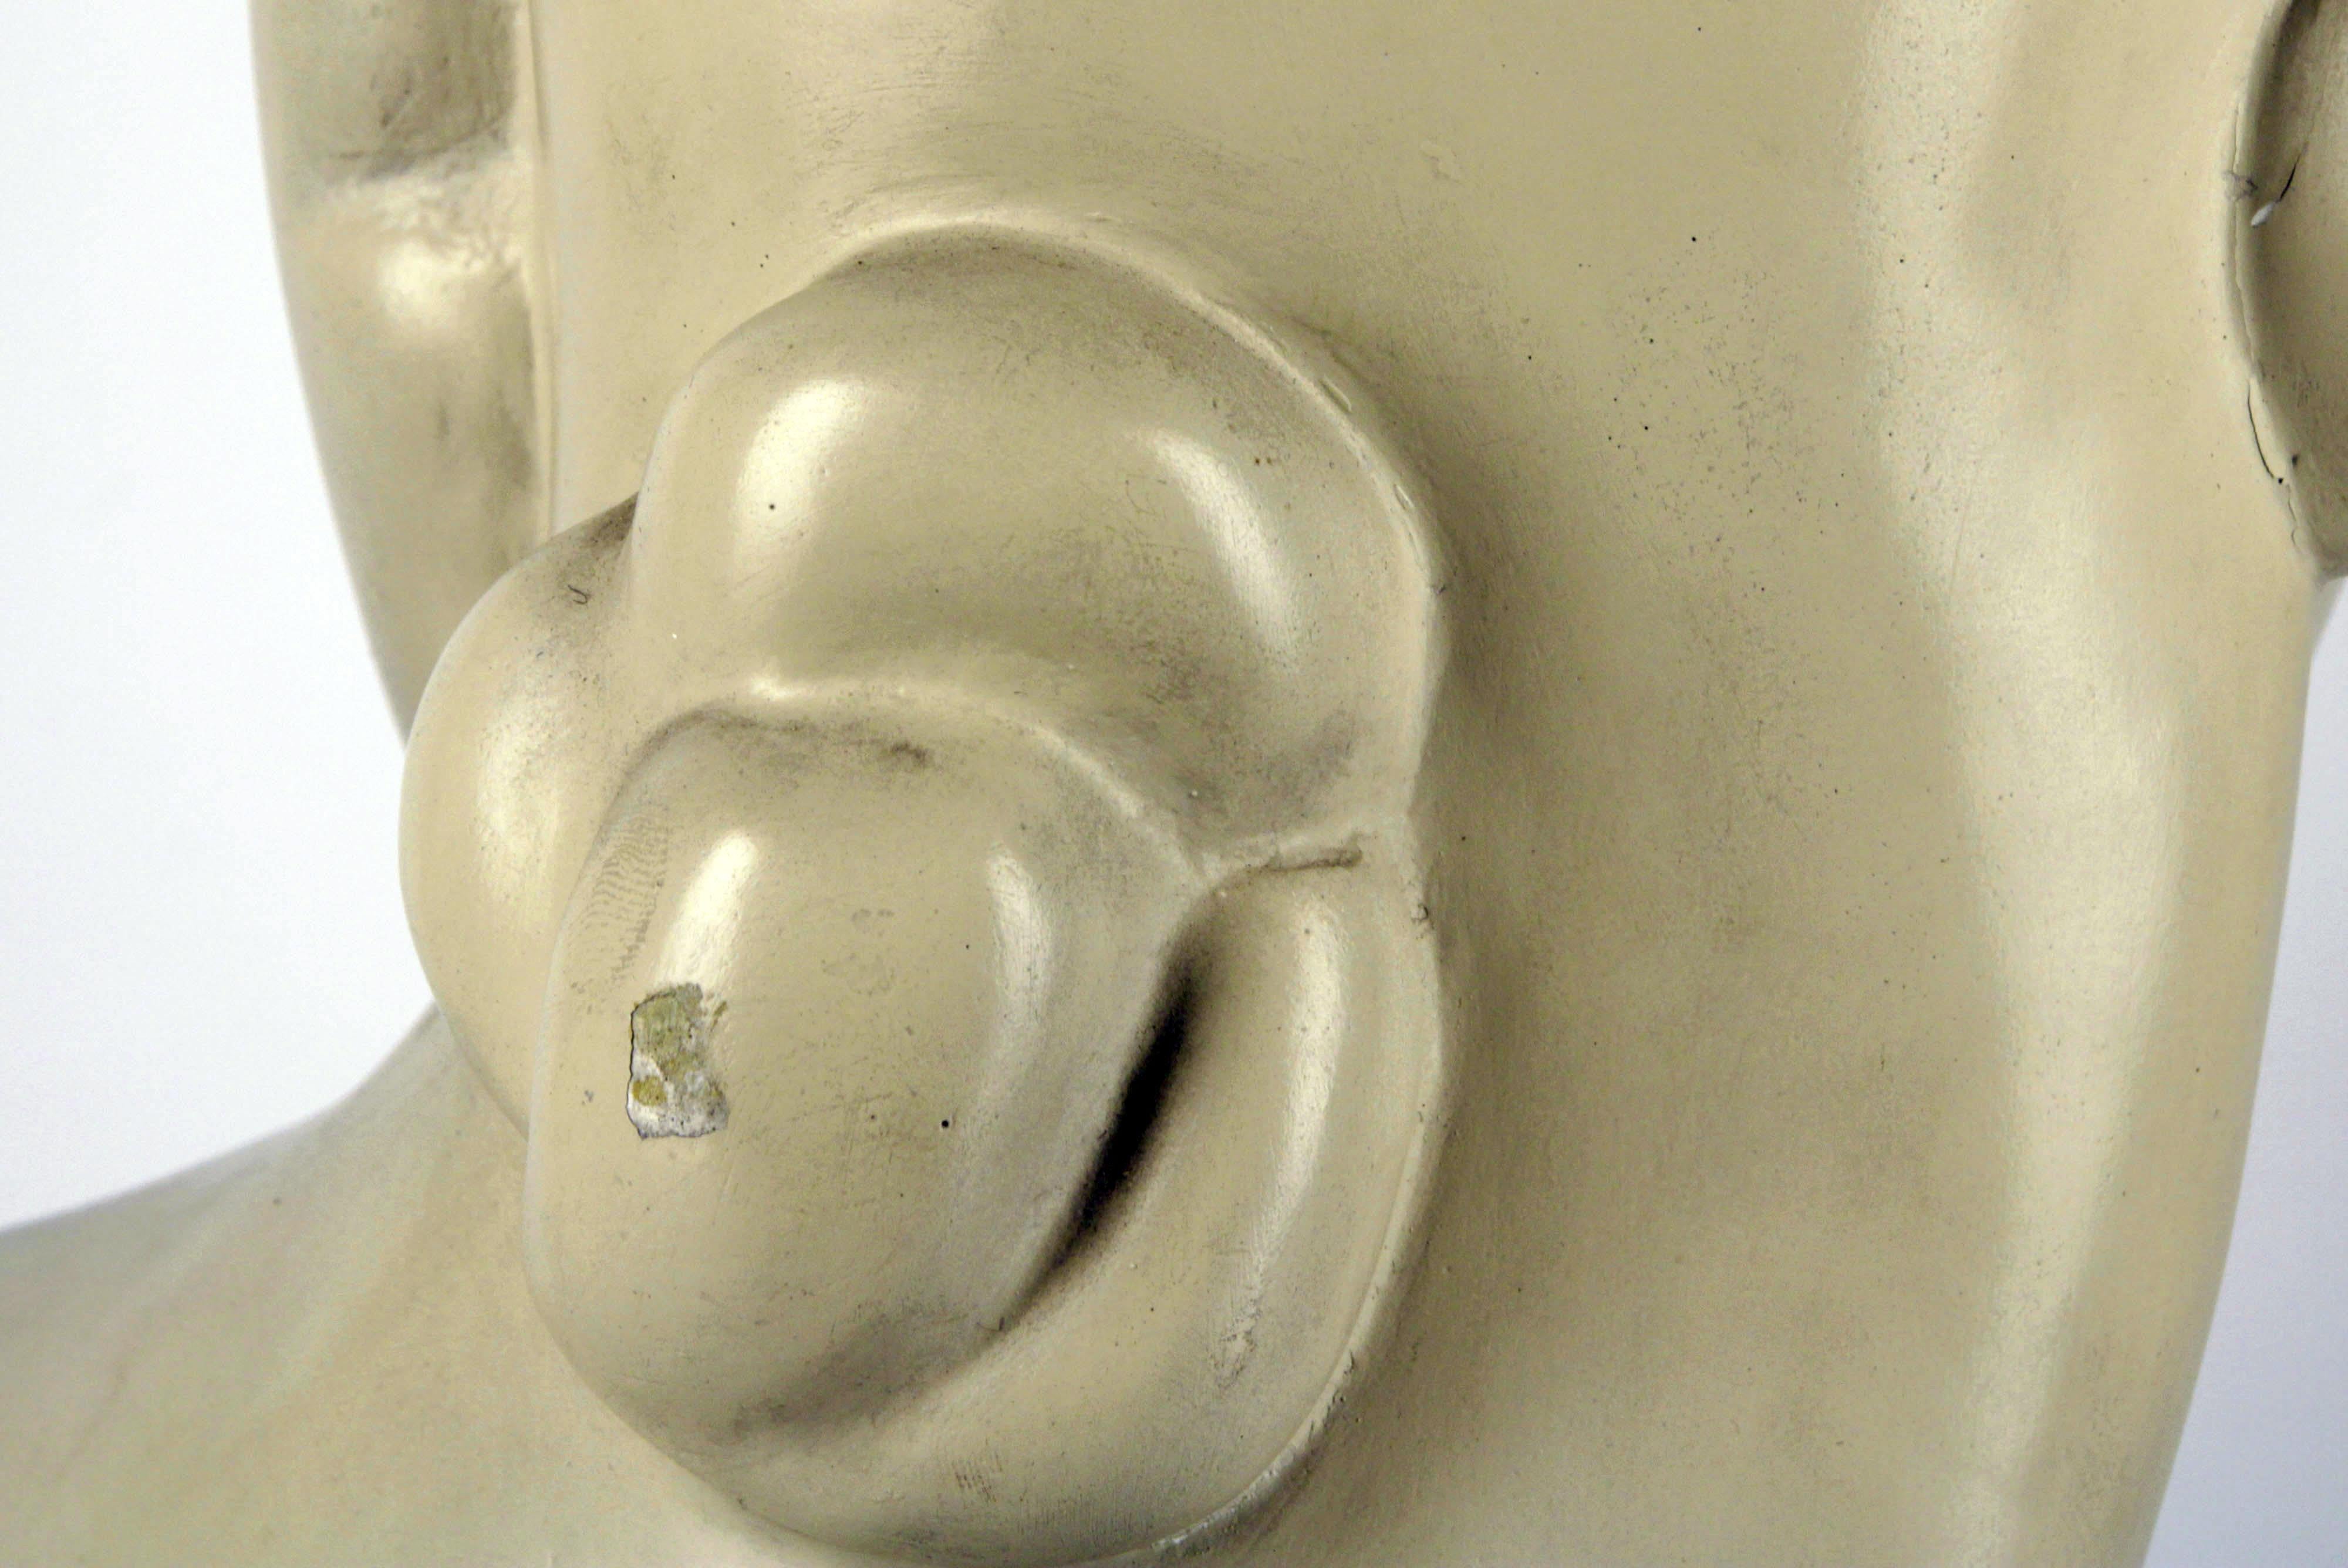 American Austin Prod's Plaster Sculpture/Bust Based on 'Mademoiselle Pogany' by Brâncuşi